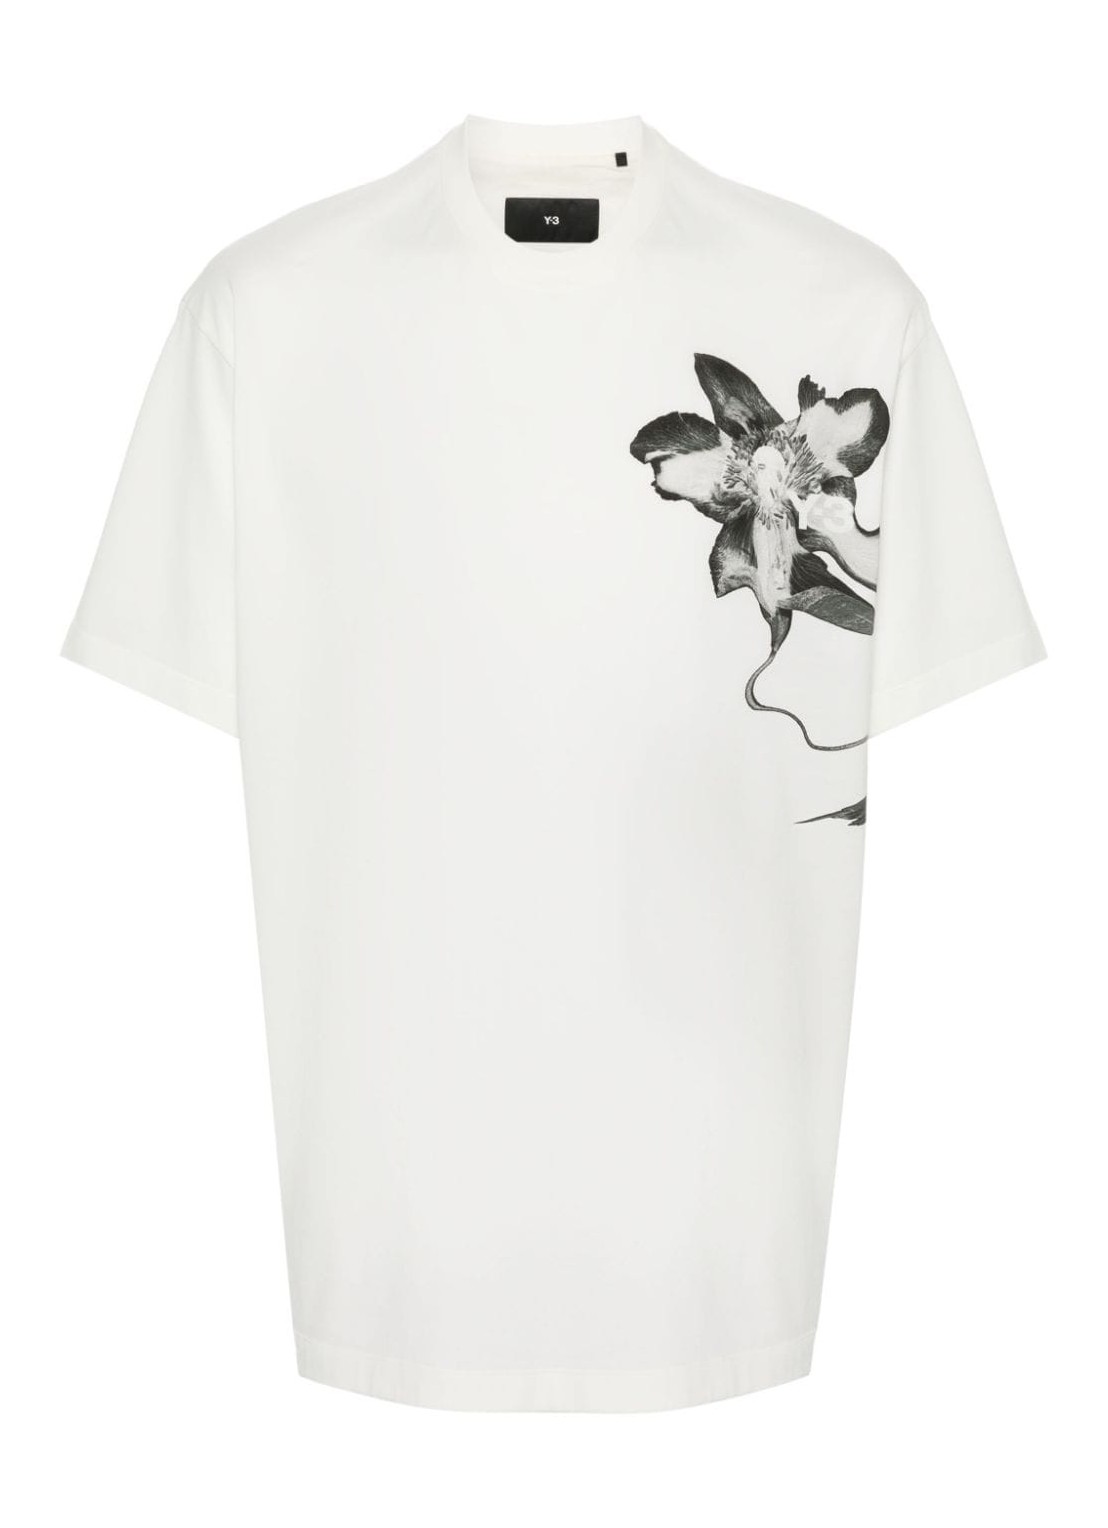 Camiseta y3 t-shirt man gfx ss tee 1 iv7737 owhite talla M
 